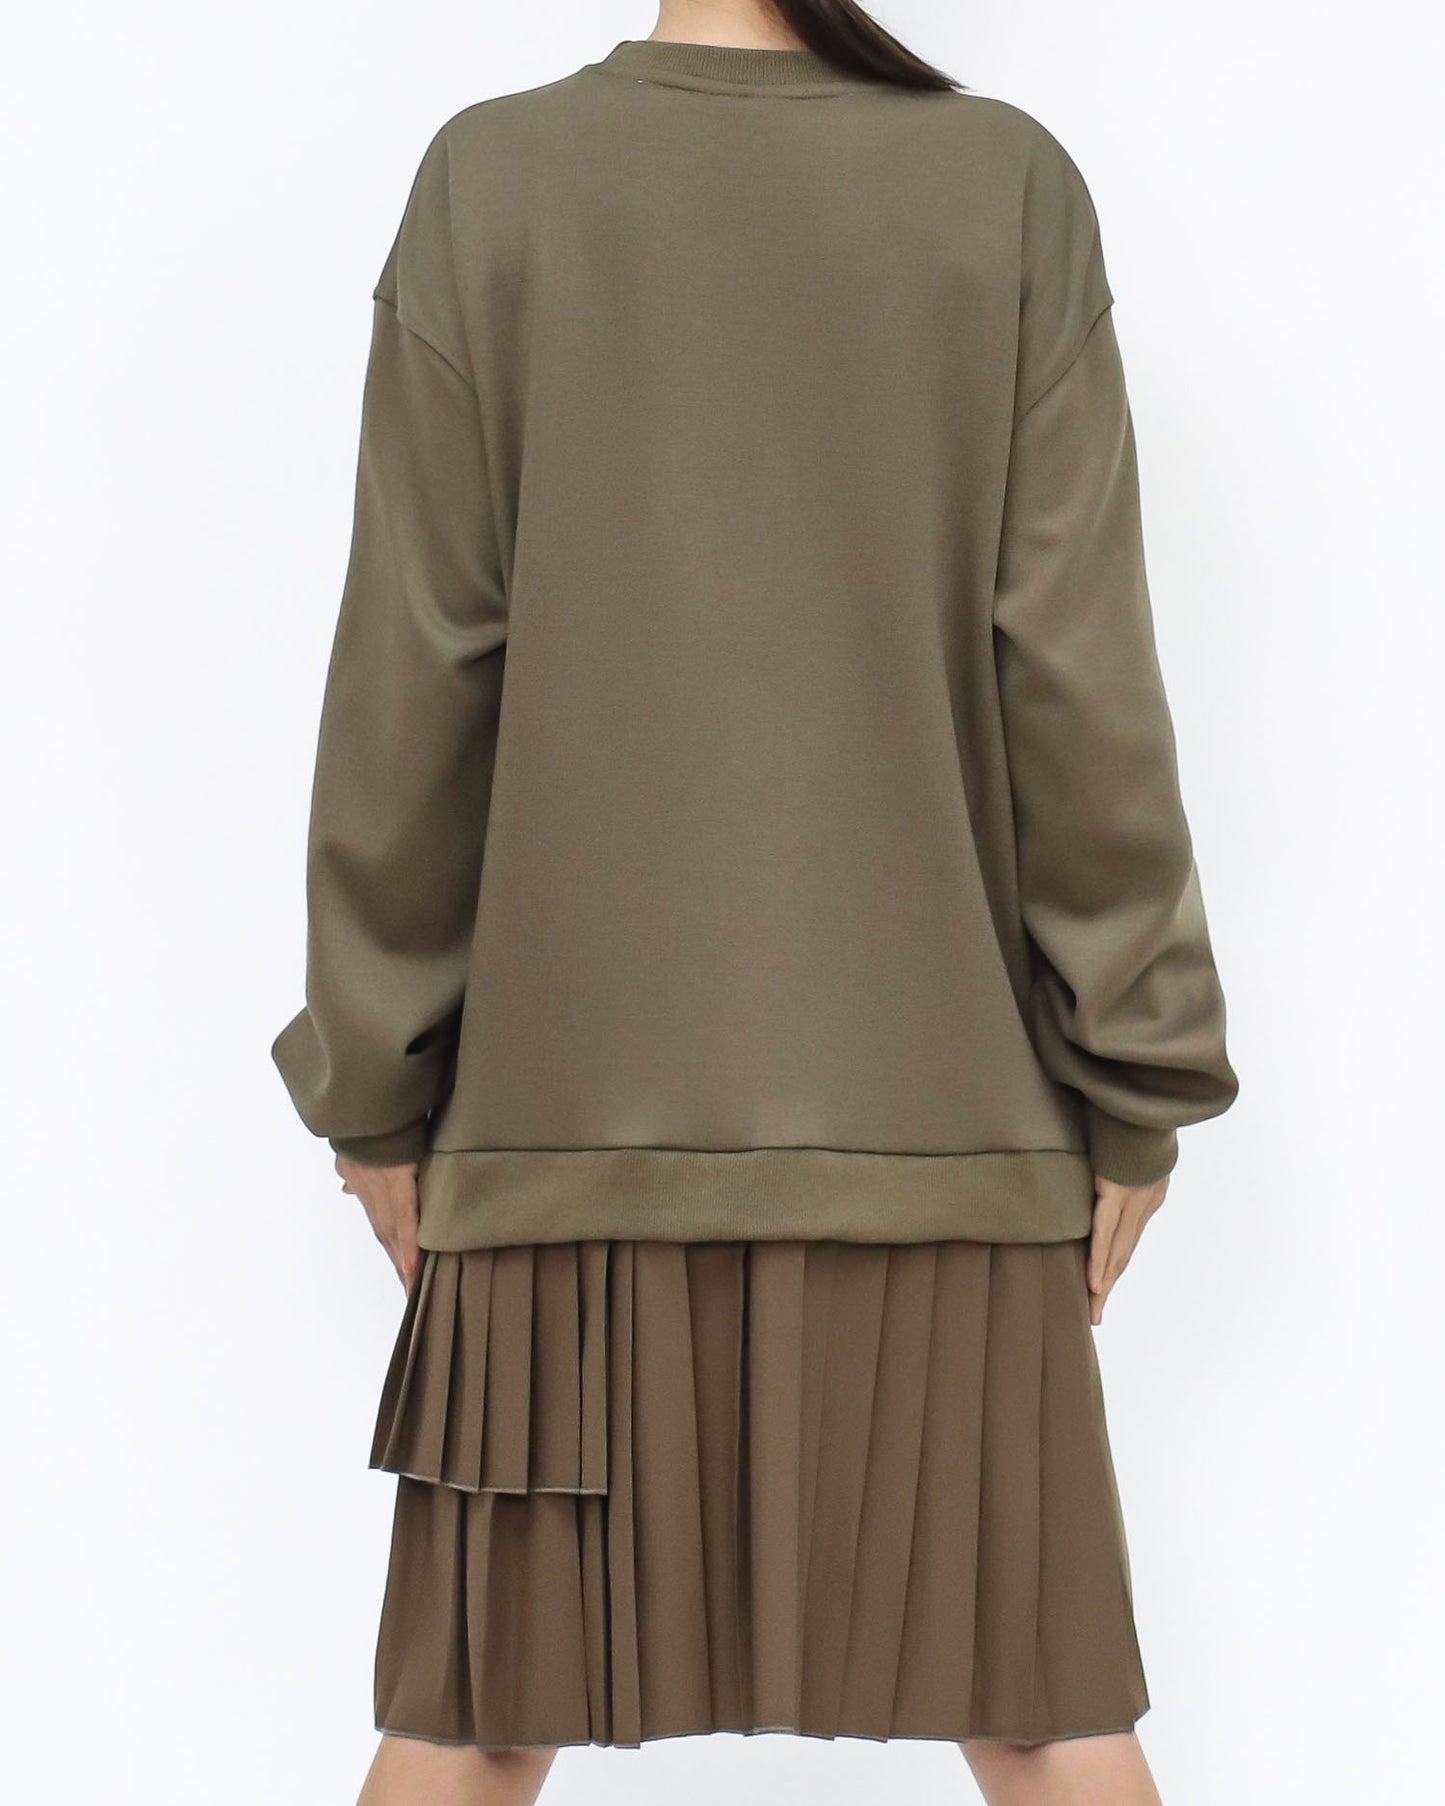 brown green sweat w/ brown pleats dress *pre-order*